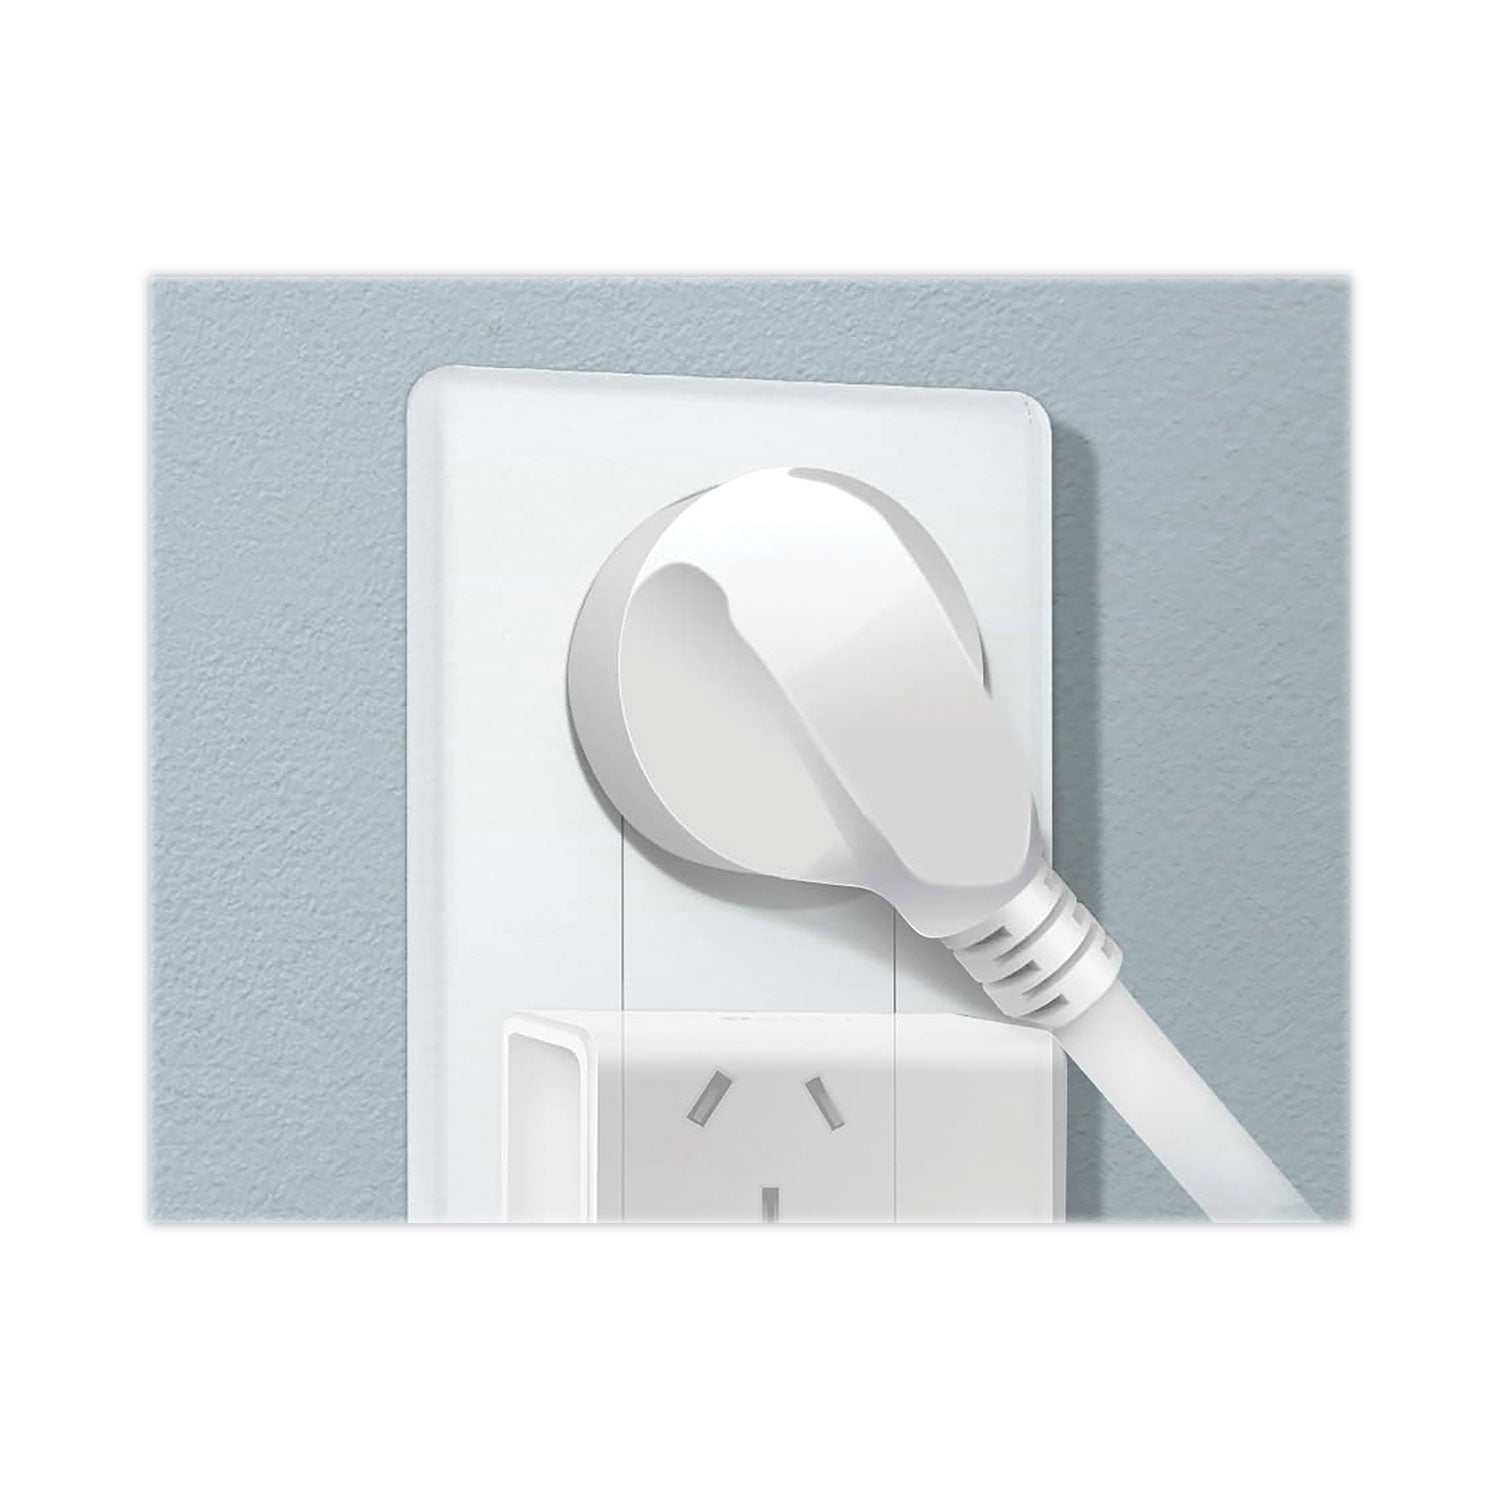 kasa-smart-wifi-3-outlet-power-strip-3-ac-outlets-2-usb-ports-white_tplkp303 - 6